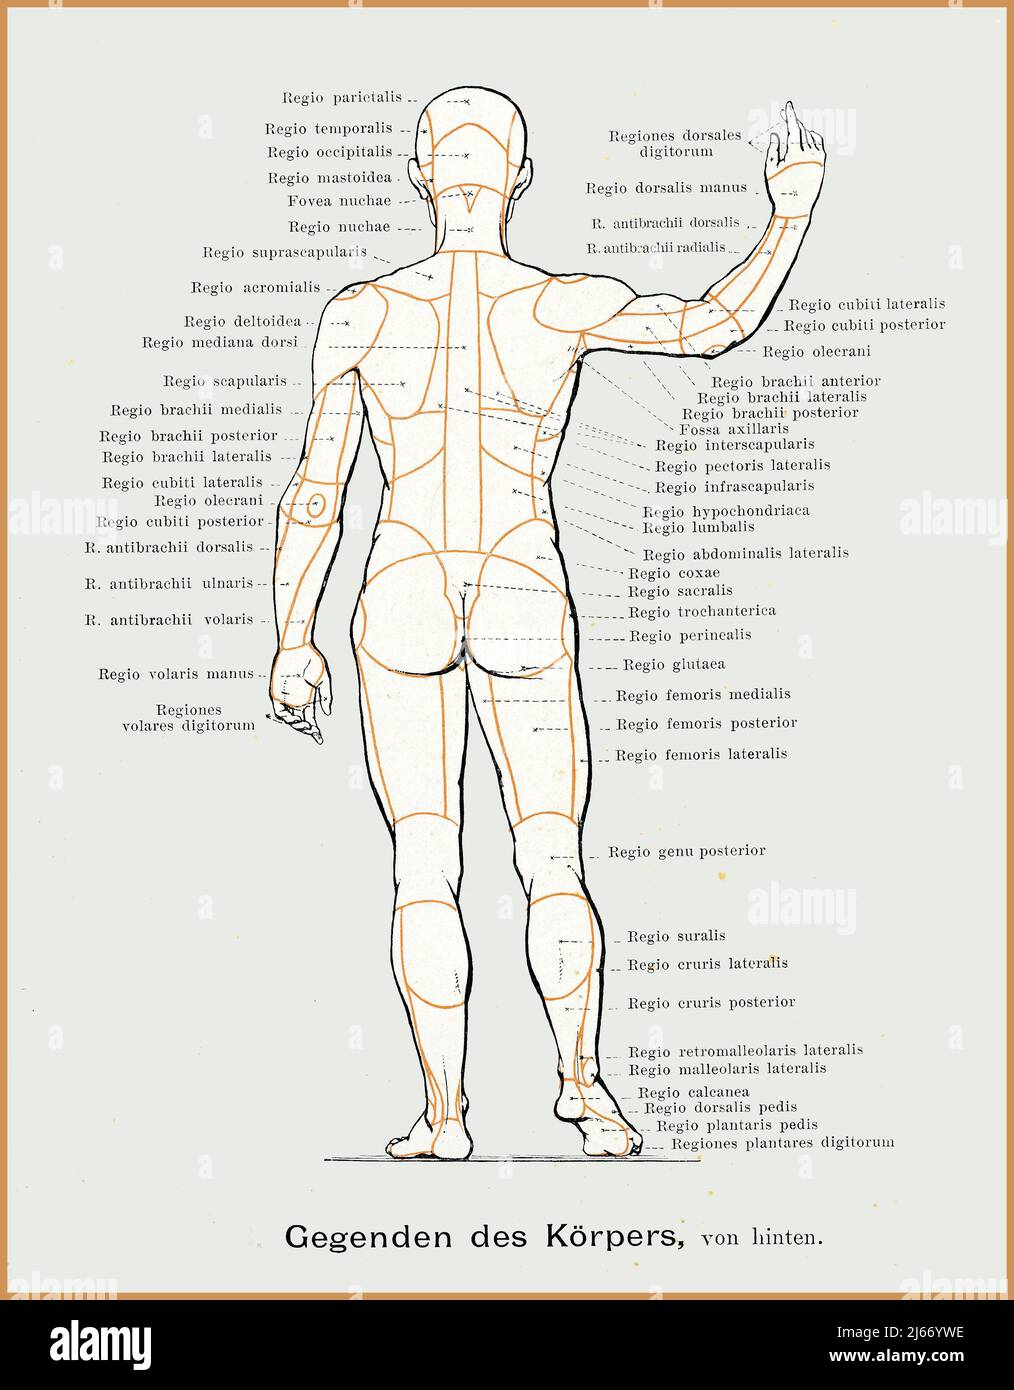 Vintage illustration of anatomy, body regions regions scheme with anatomical descriptions Stock Photo